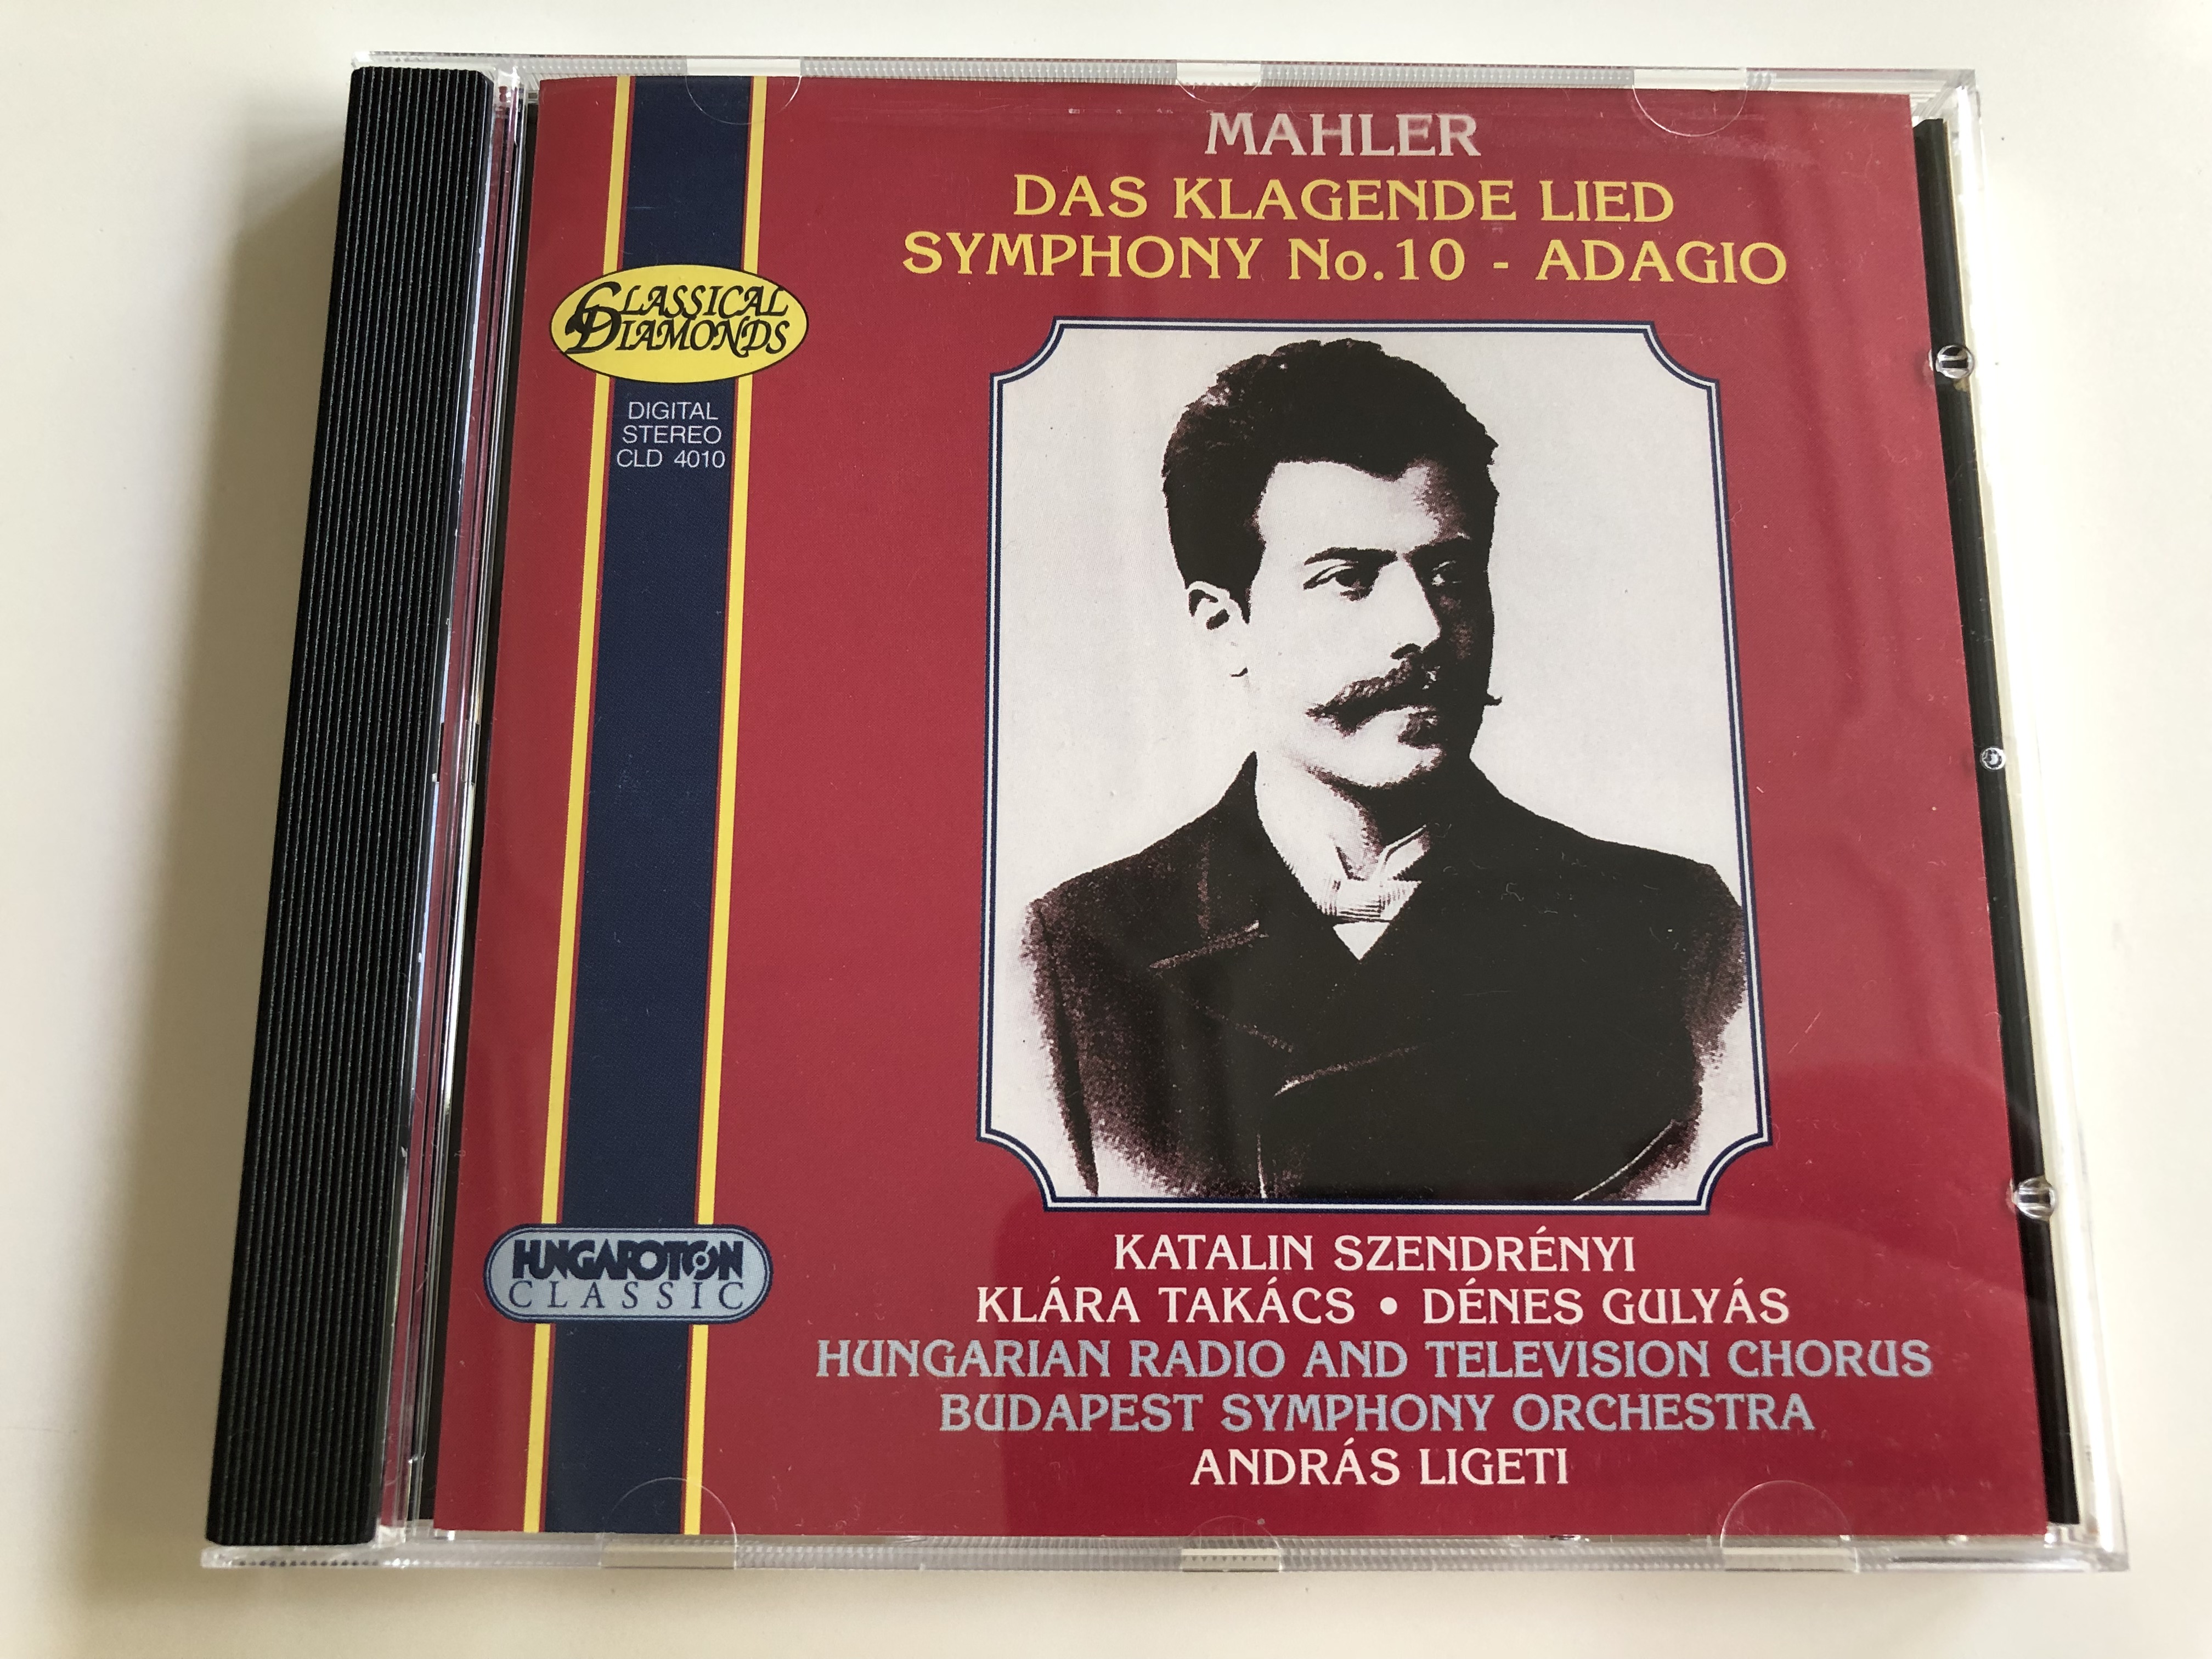 -mahler-das-klagende-lied-symphony-no.10-adagio-katalin-szendr-nyi-kl-ra-tak-cs-d-nes-guly-s-hungarian-radio-and-television-chorus-budapest-symphony-orchestra-conducted-by-andr-s-ligeti-cld-4010-audio-cd-1996-1-.jpg